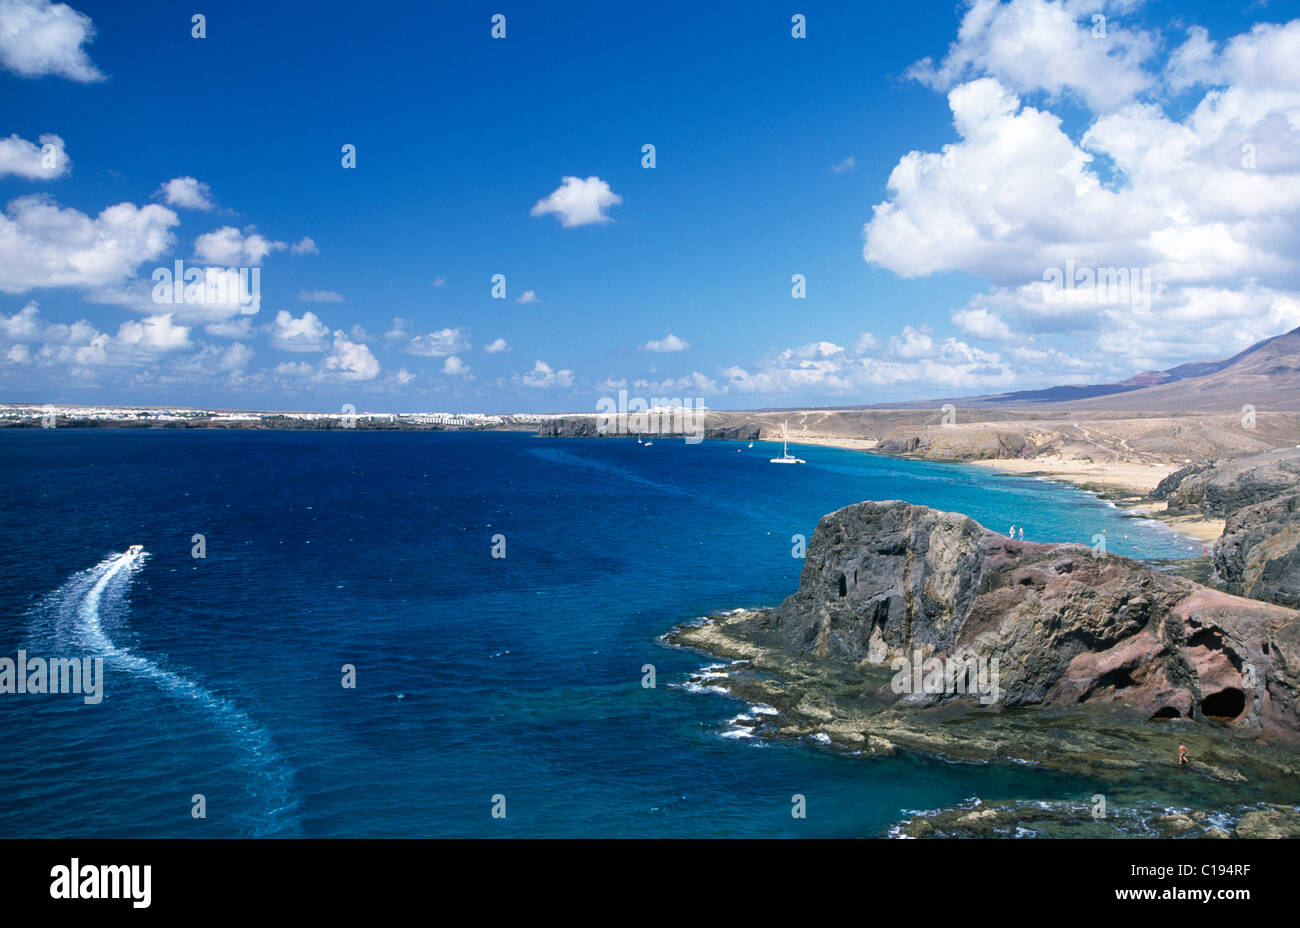 Playa Papagayo, Lanzarote, Canary Islands, Spain, Europe Banque D'Images